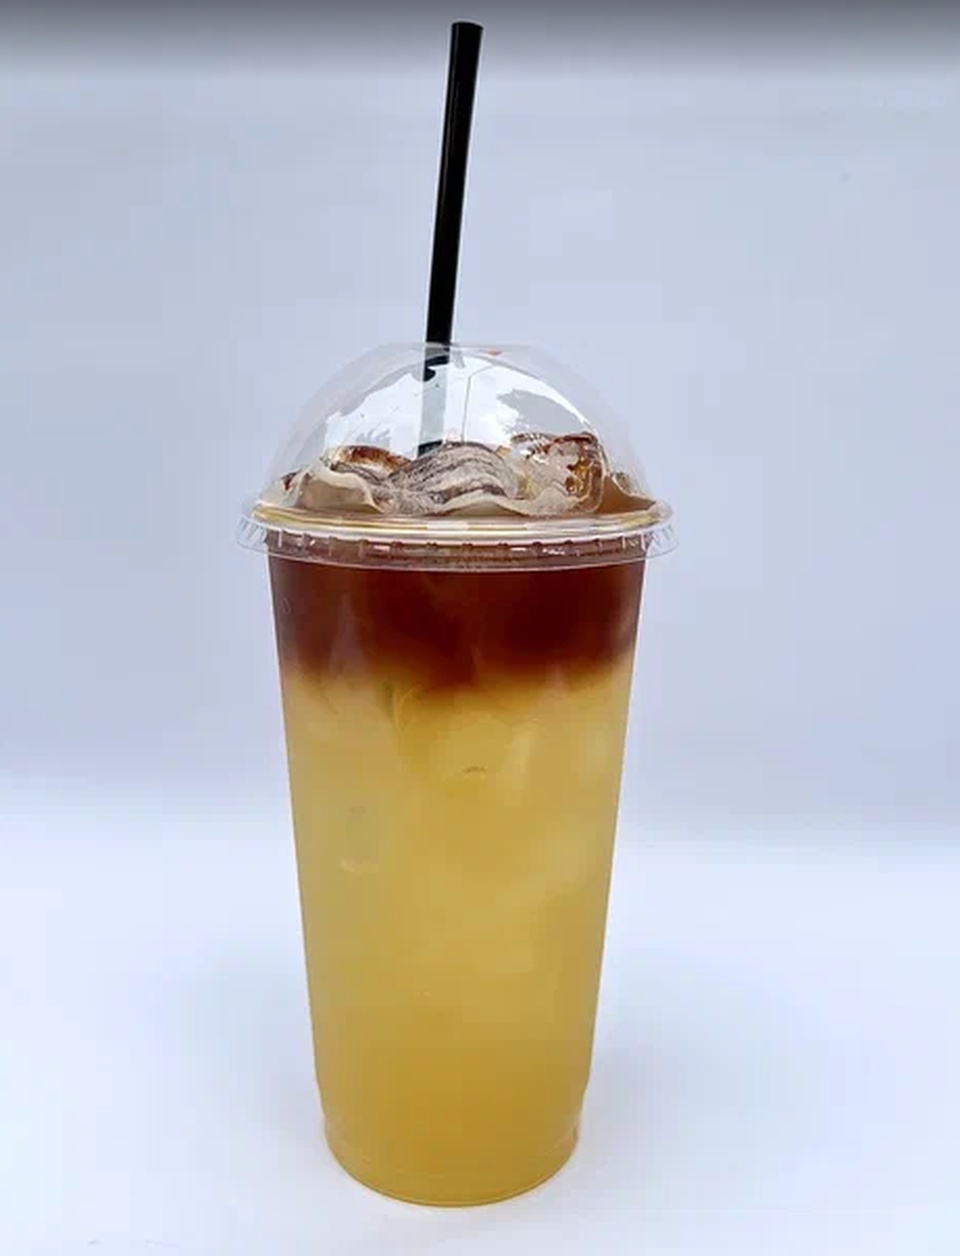 Бамбл Кофе - 160 ₽, заказать онлайн.